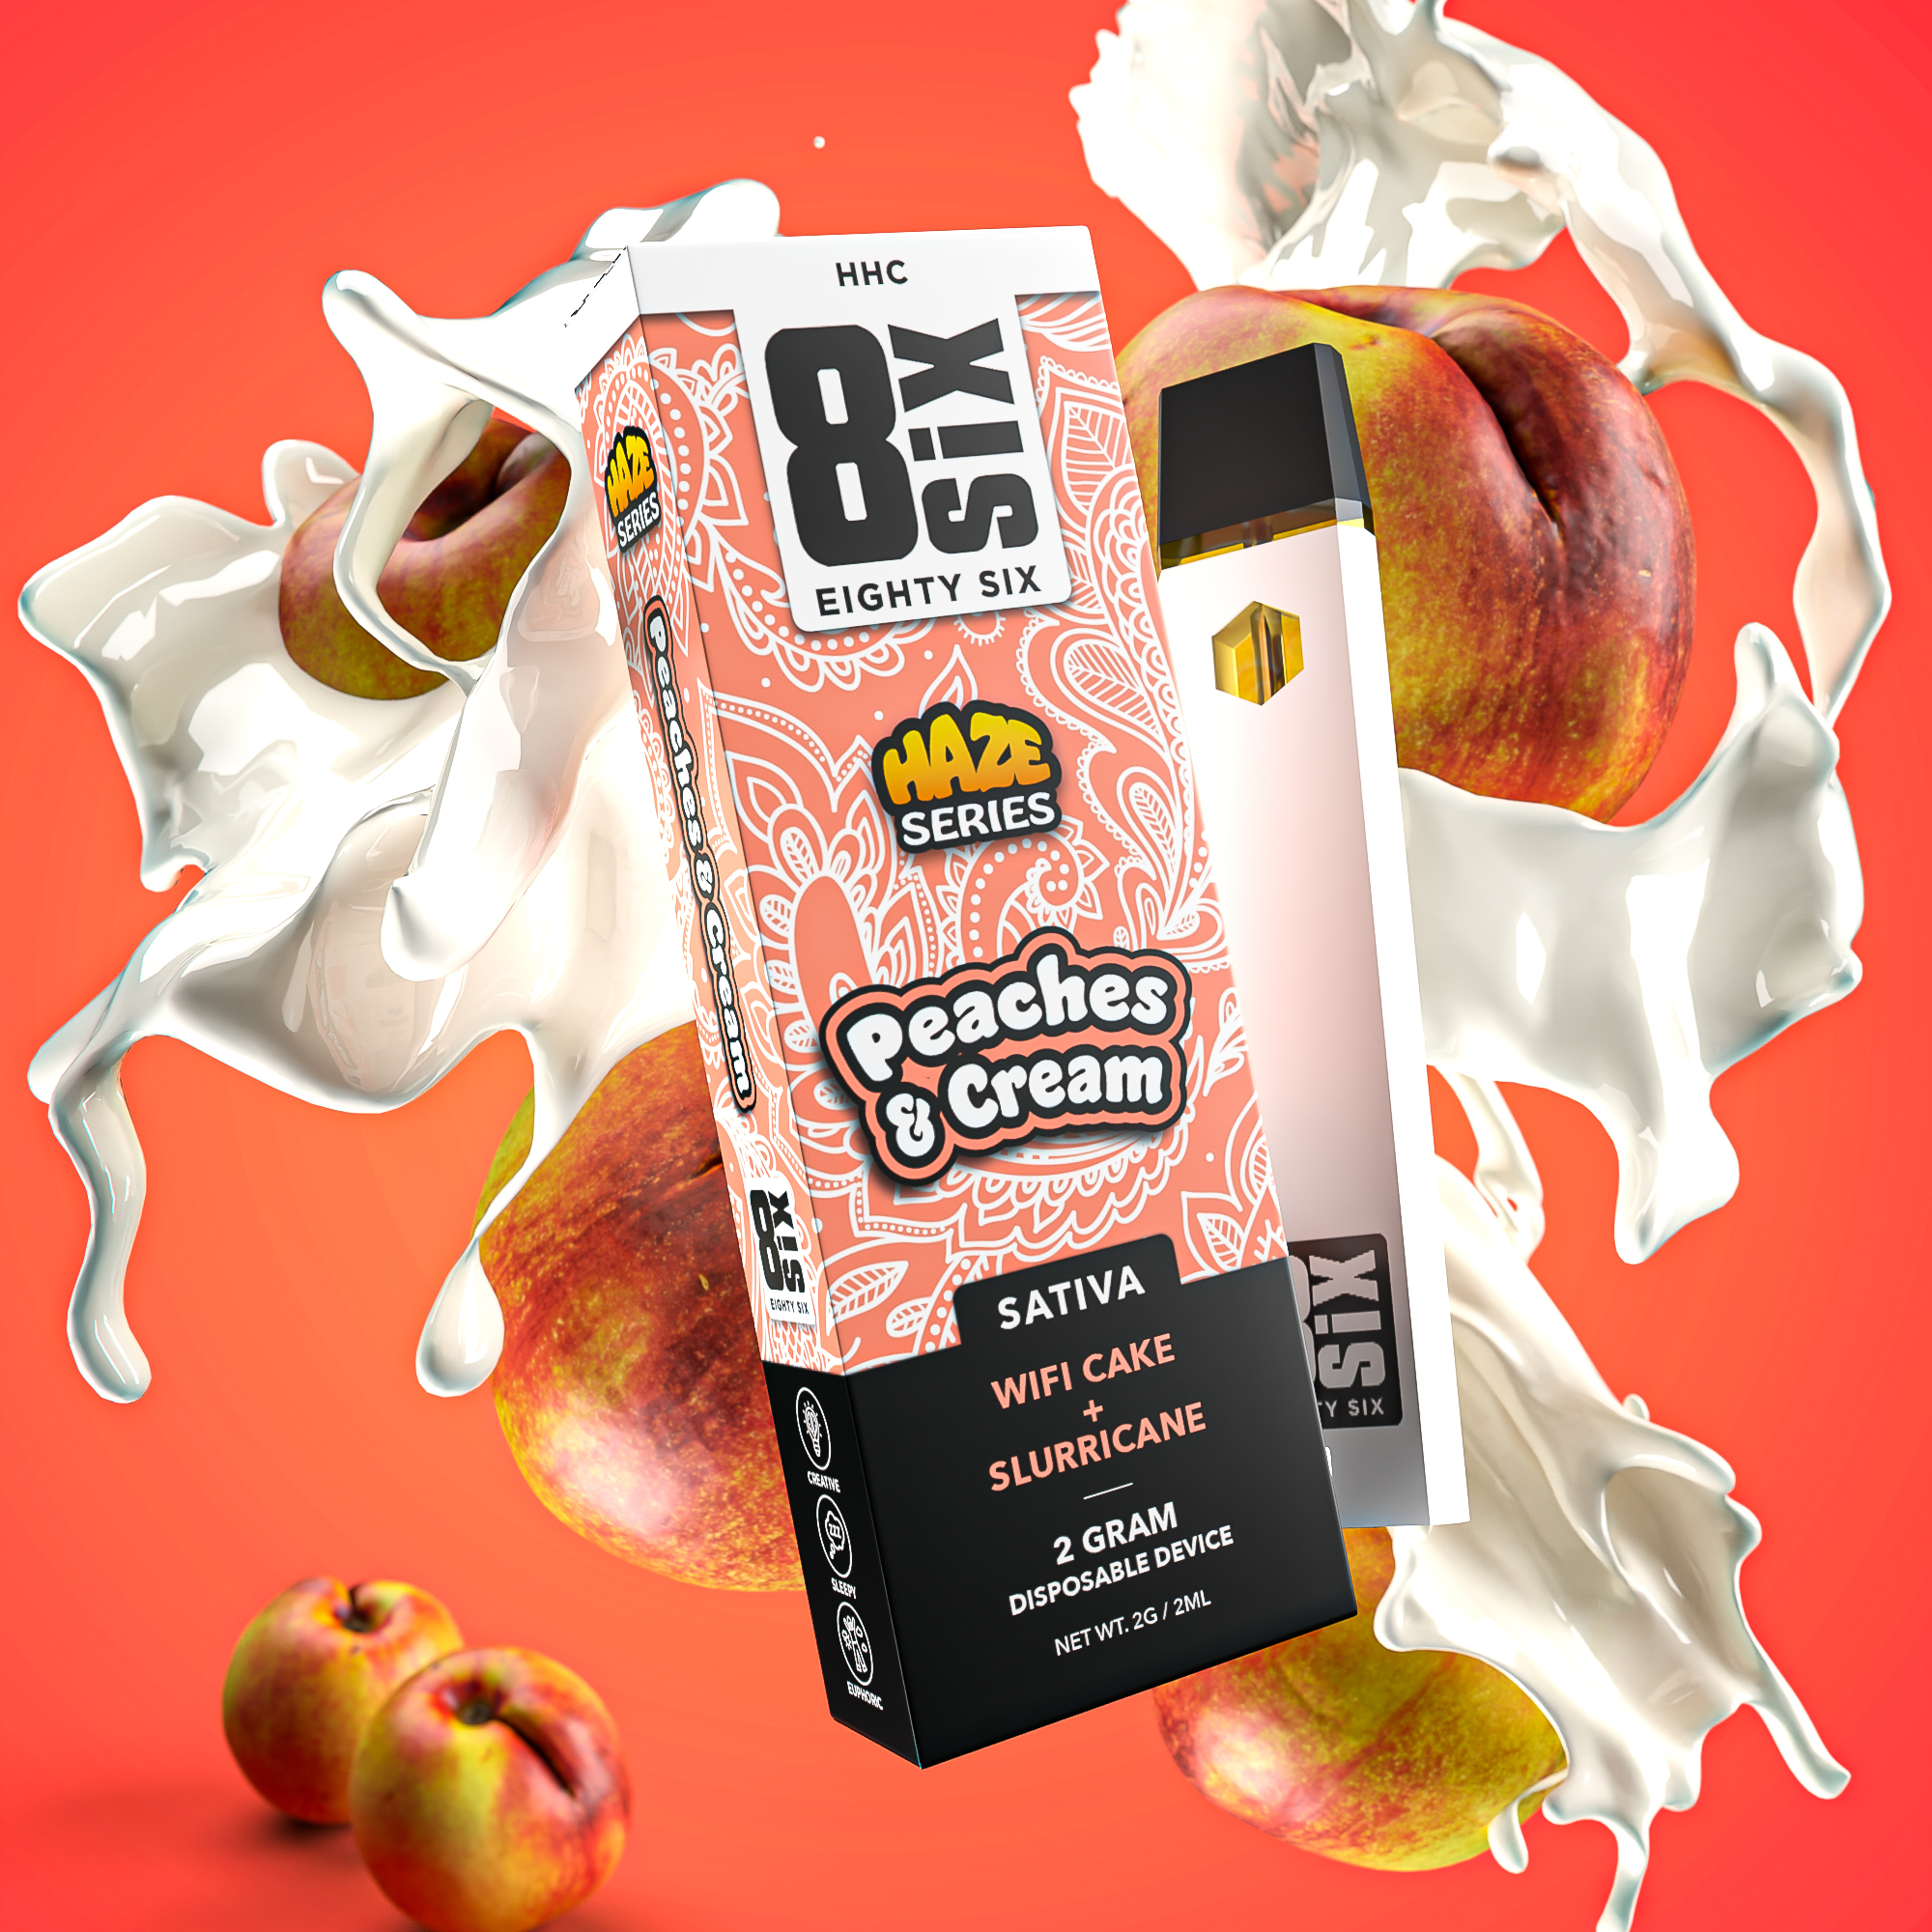 Eighty Six Peaches & Cream HHC 2G Disposable (WiFi Cake) Best Price